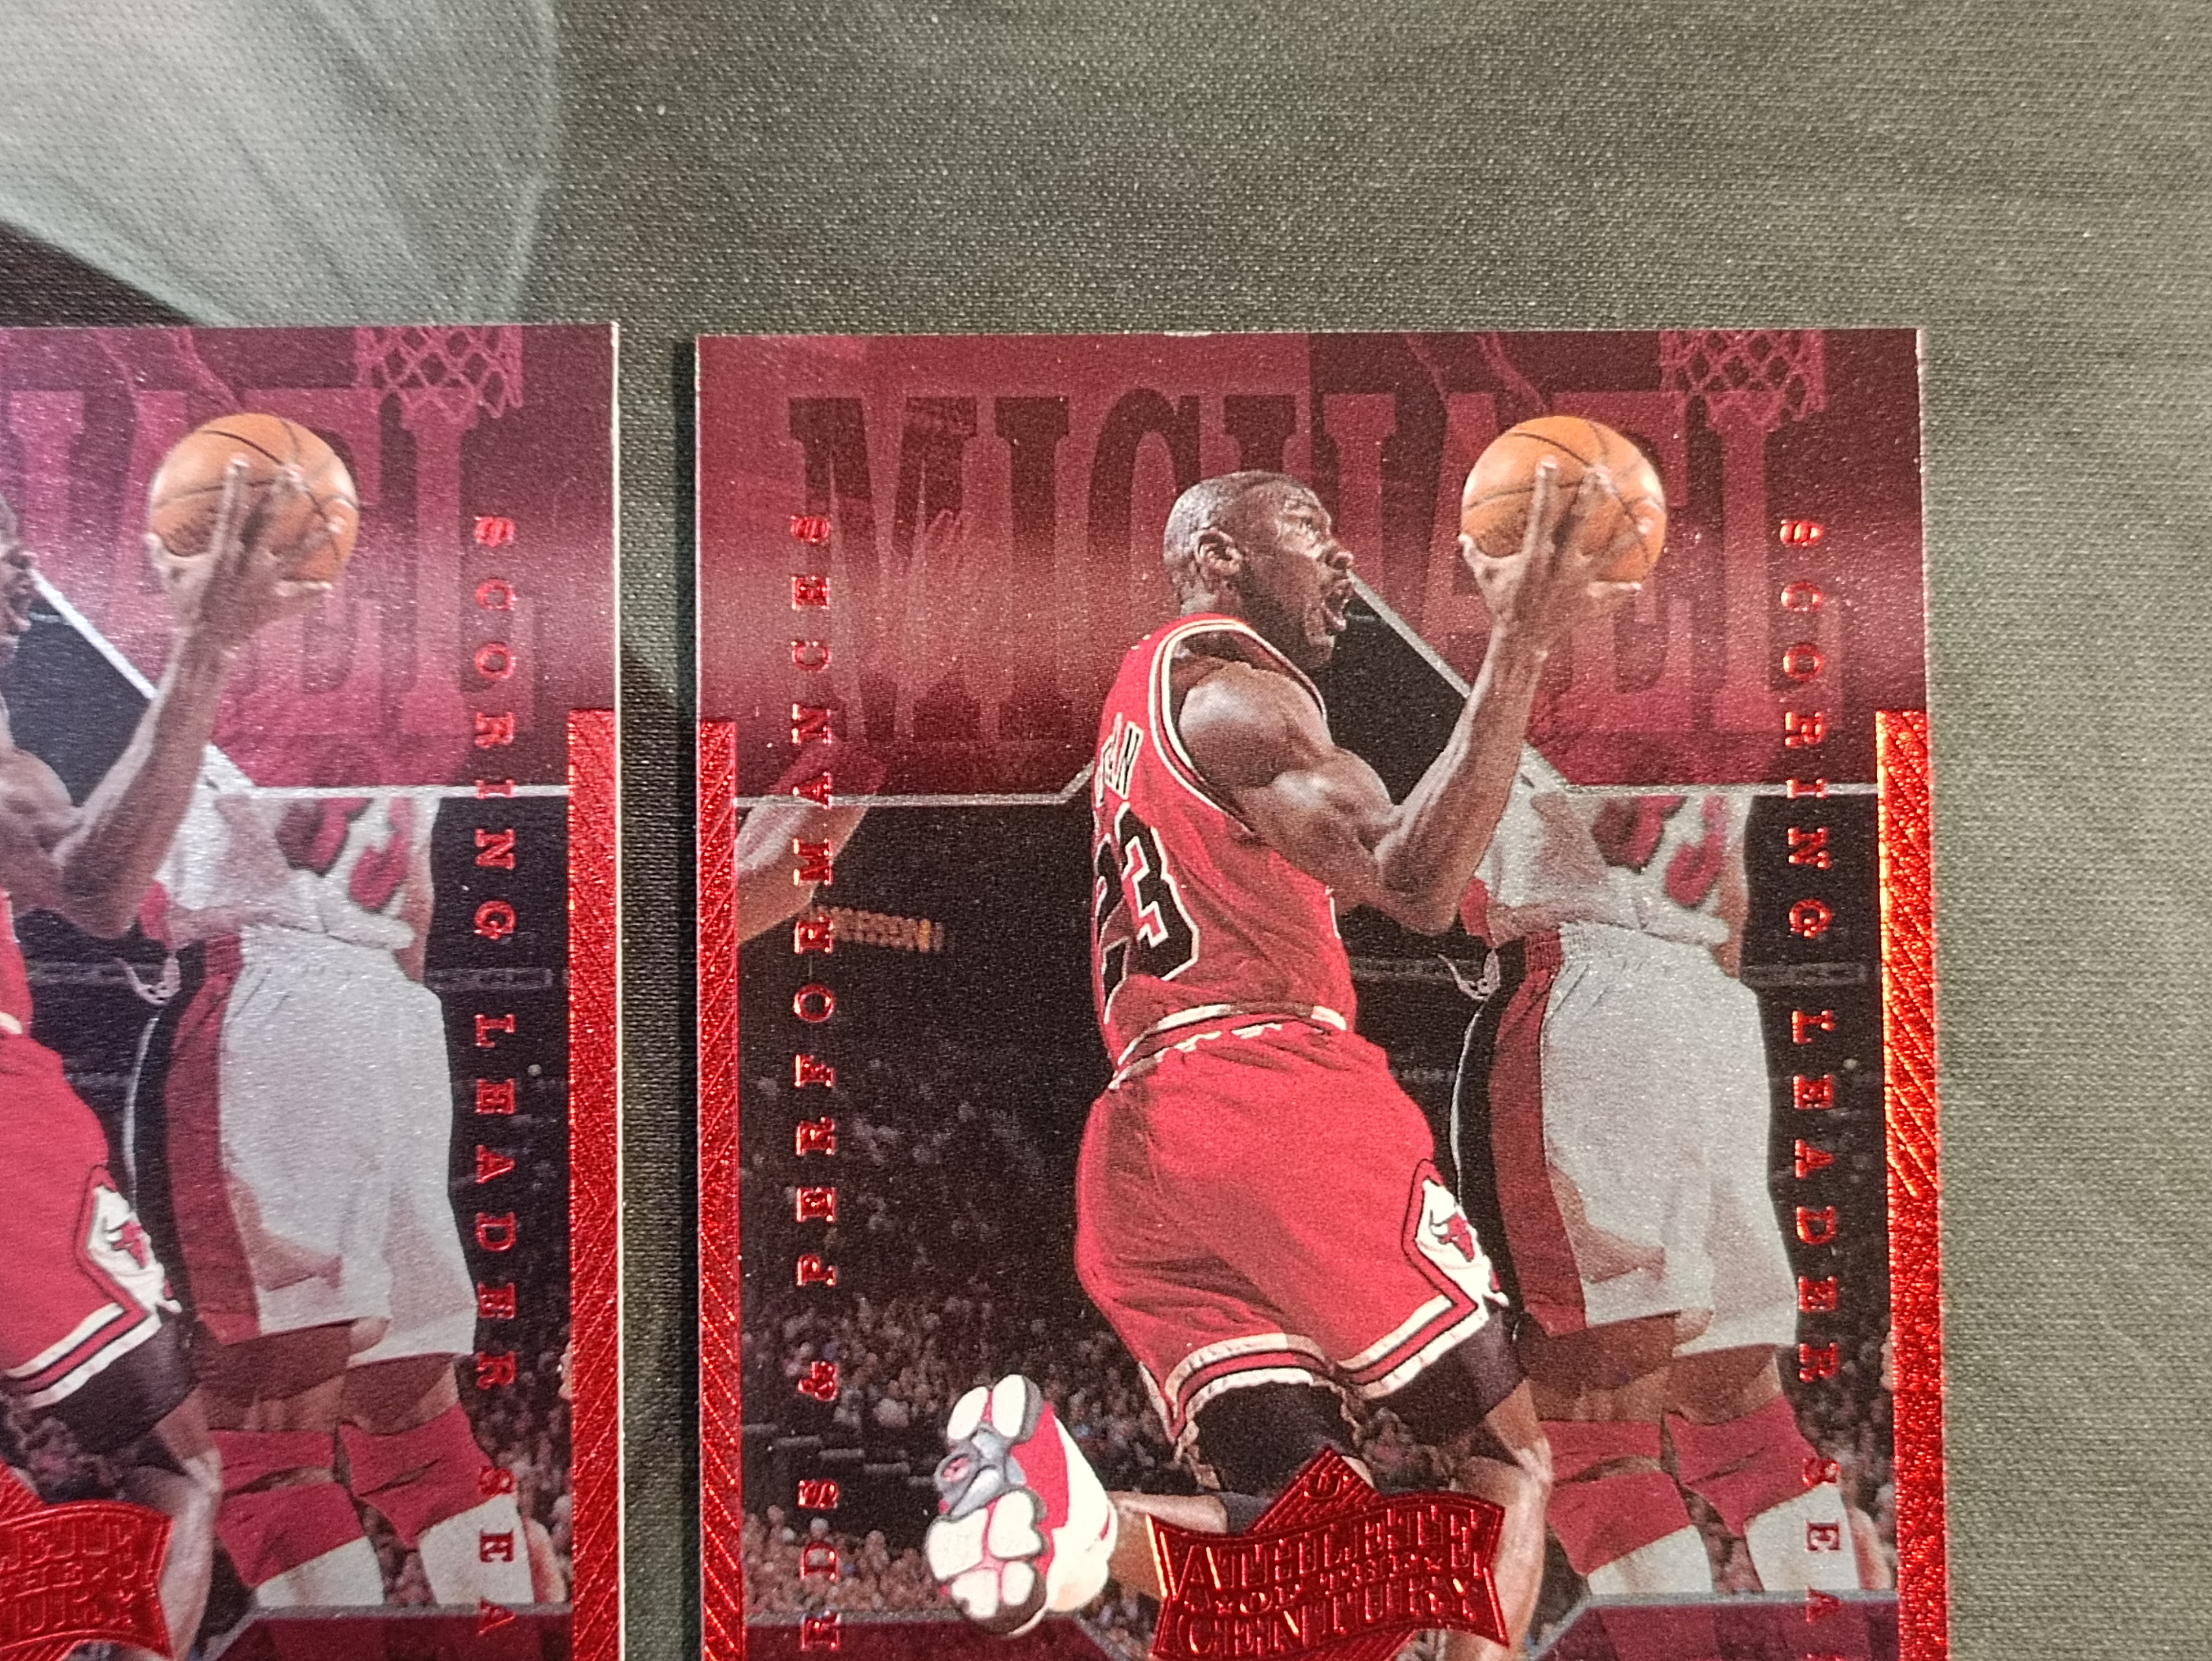 1999 Upper Deck Athlete of the Century Michael Jordan 迈克尔乔丹 MJ23 生涯卡 打包4张lot 公牛(打包不保卡品)《苏州卡通》J【ZXY】